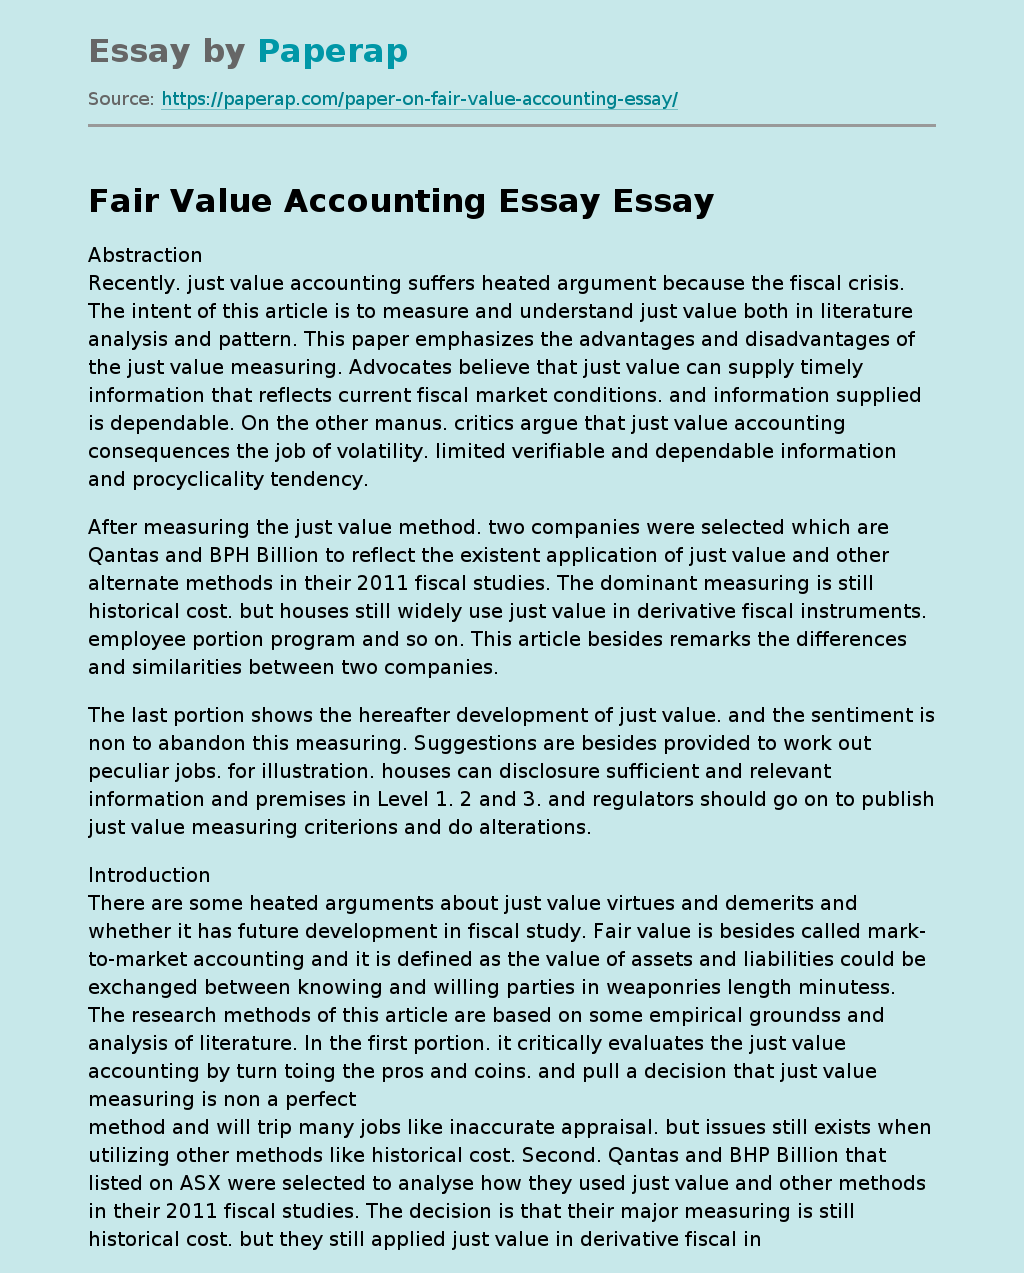 Fair Value Accounting Essay